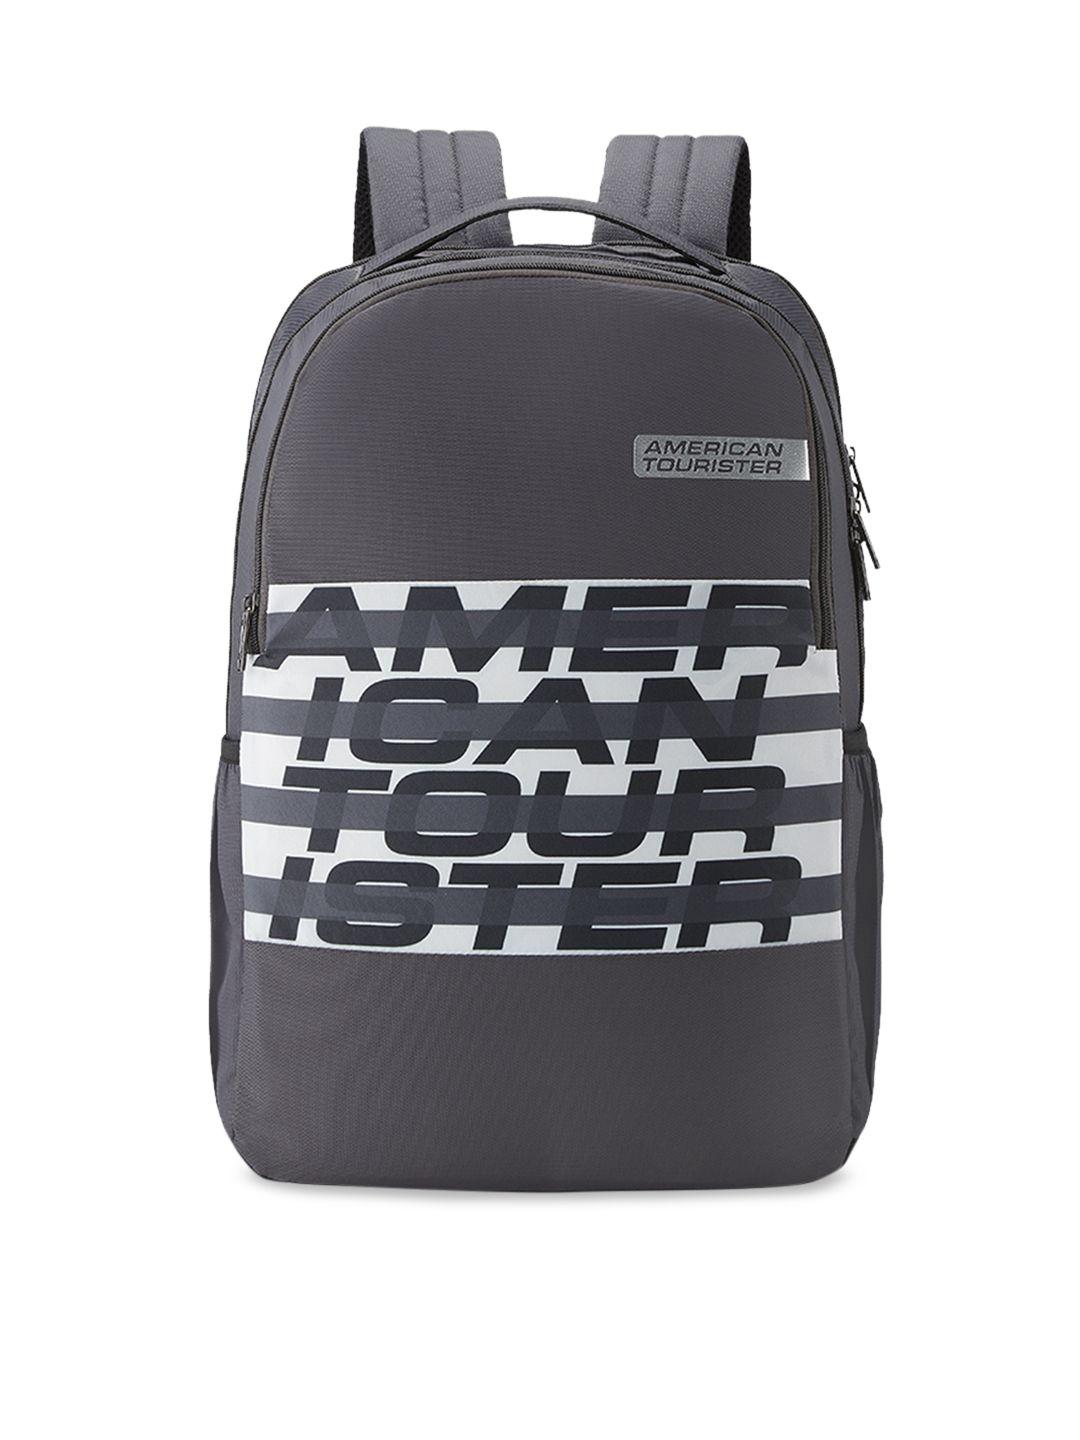 american tourister unisex grey brand logo backpack